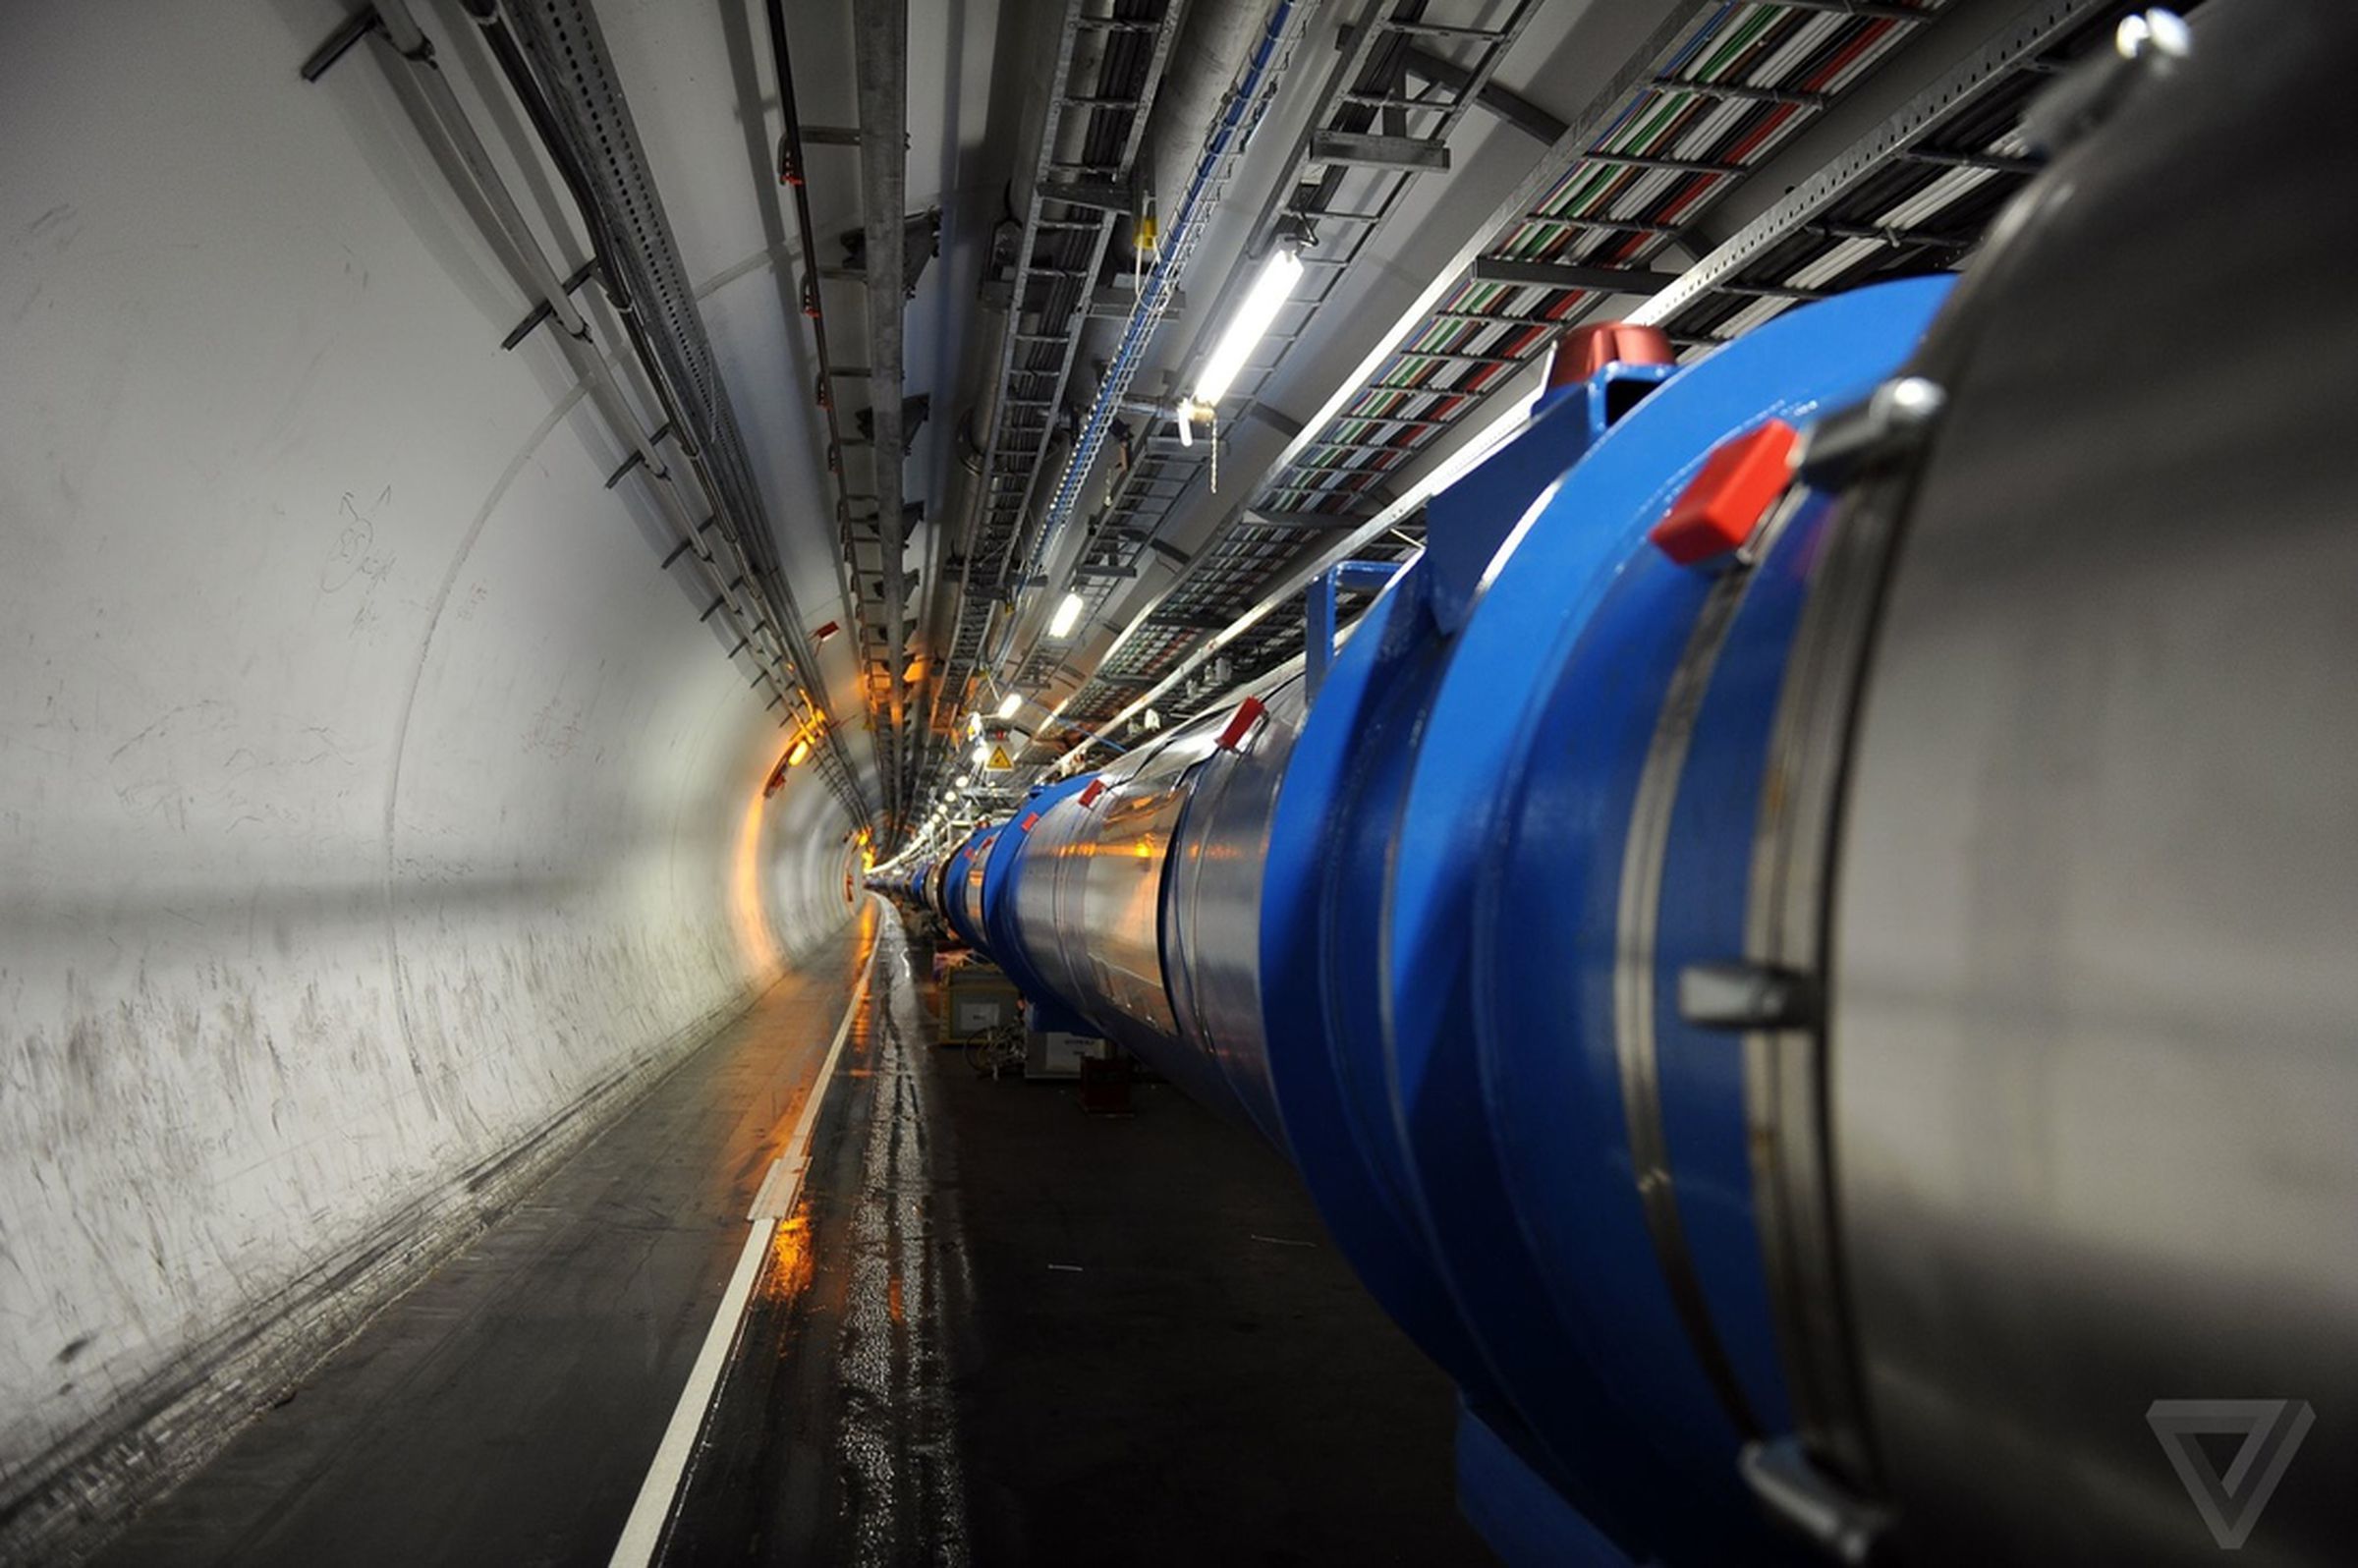 Large Hadron Collider photo tour